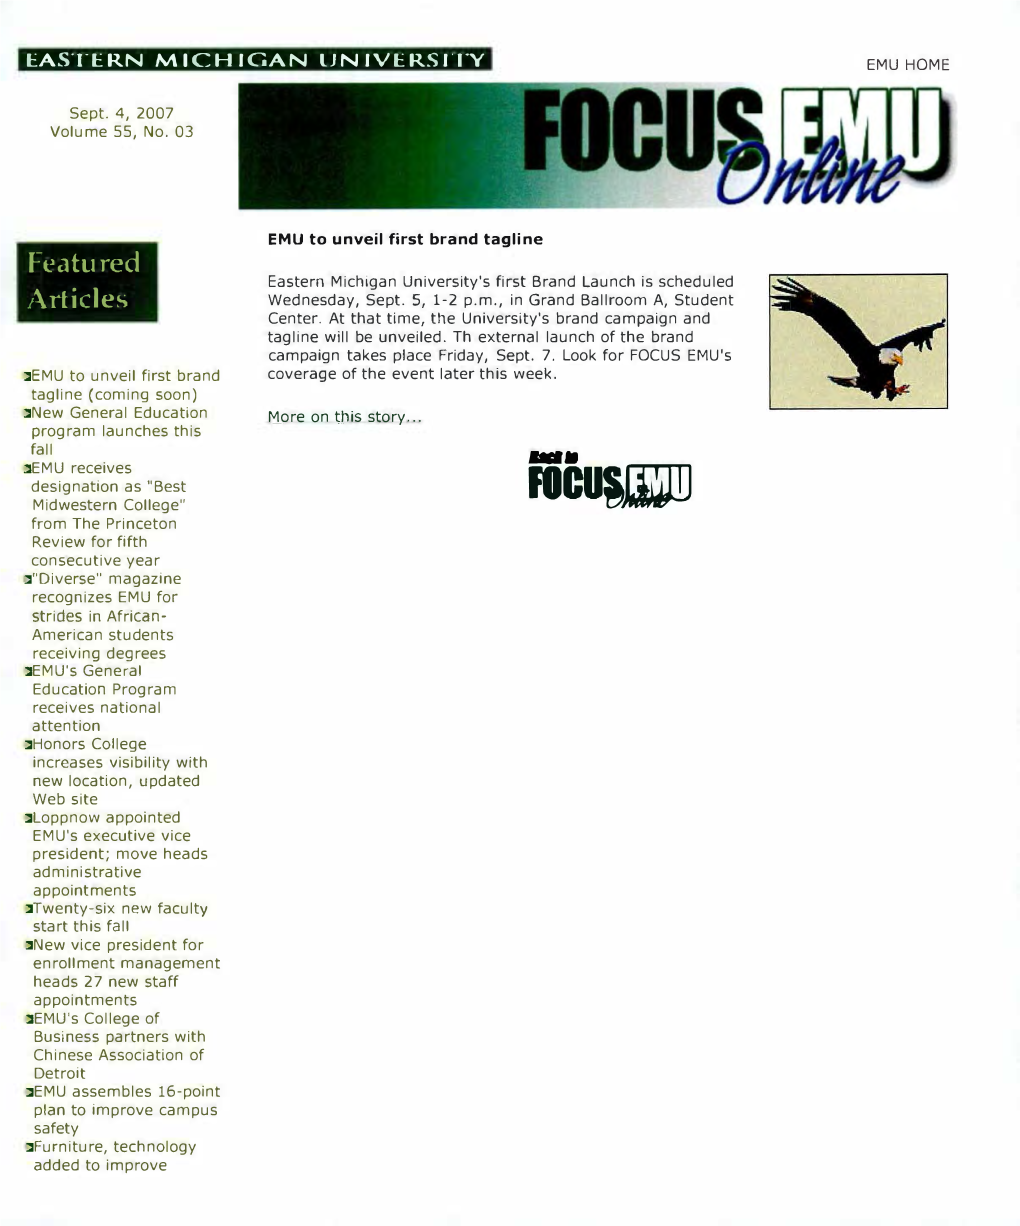 Focus EMU, September 4, 2007